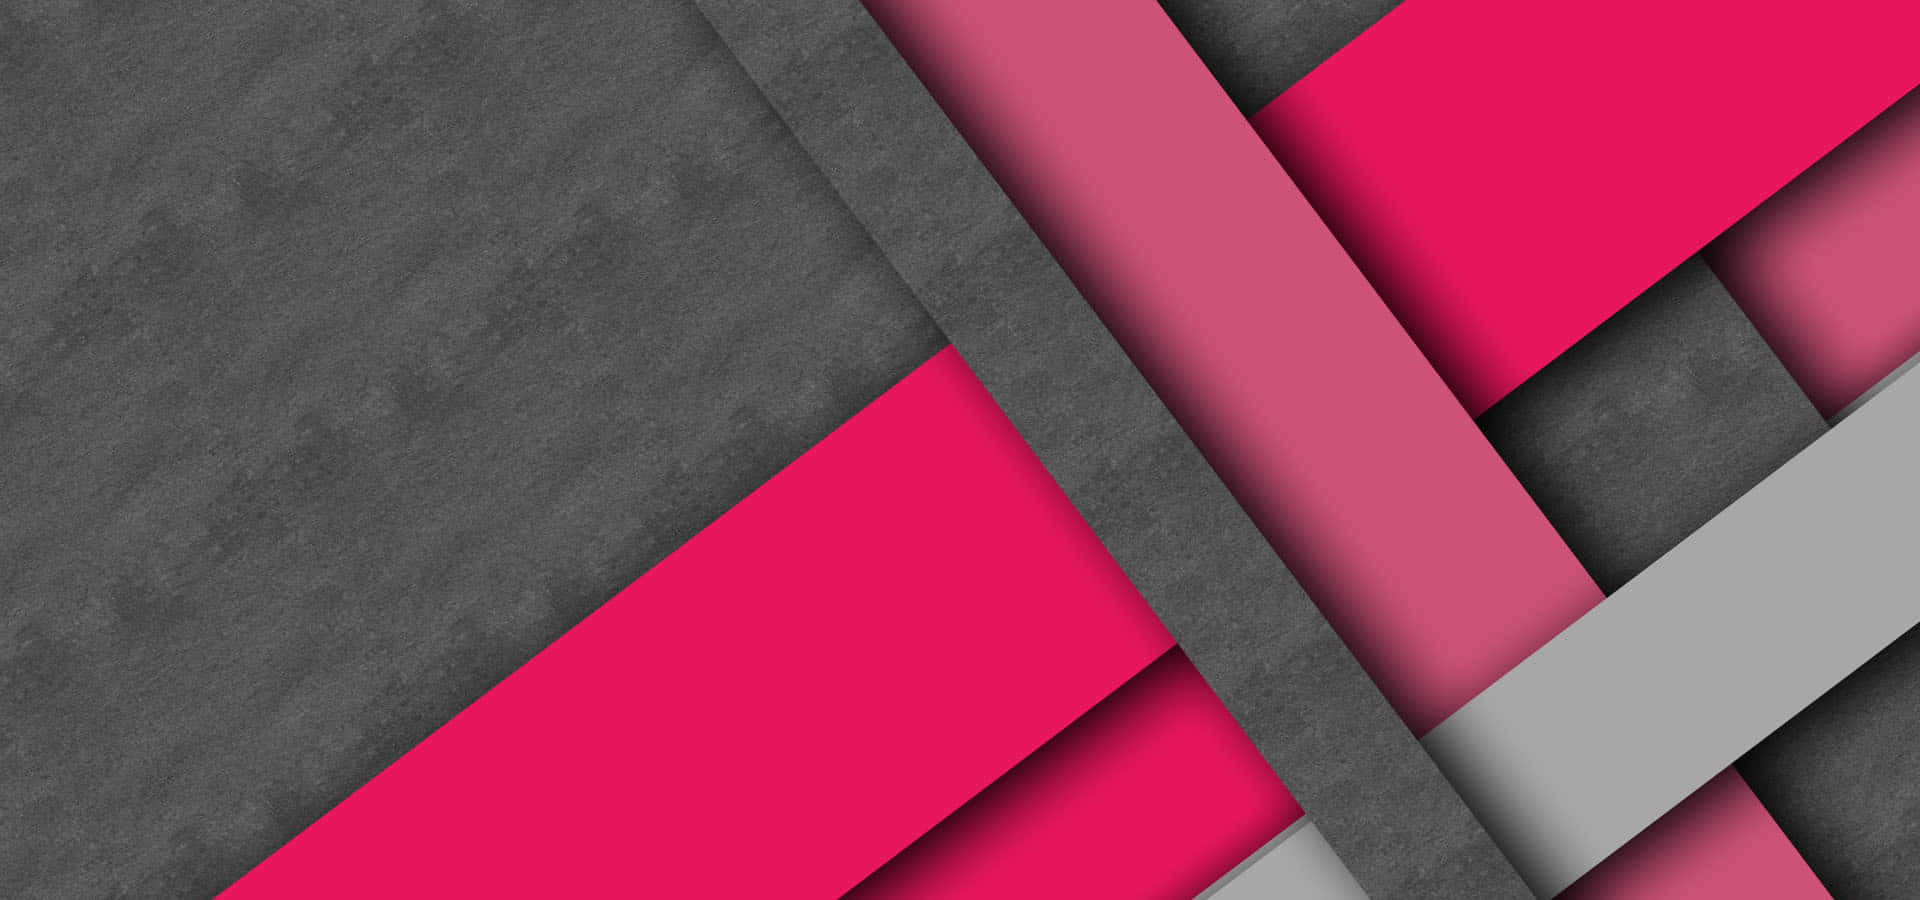 Abstract Gray and Pink Wavy Pattern Wallpaper Wallpaper